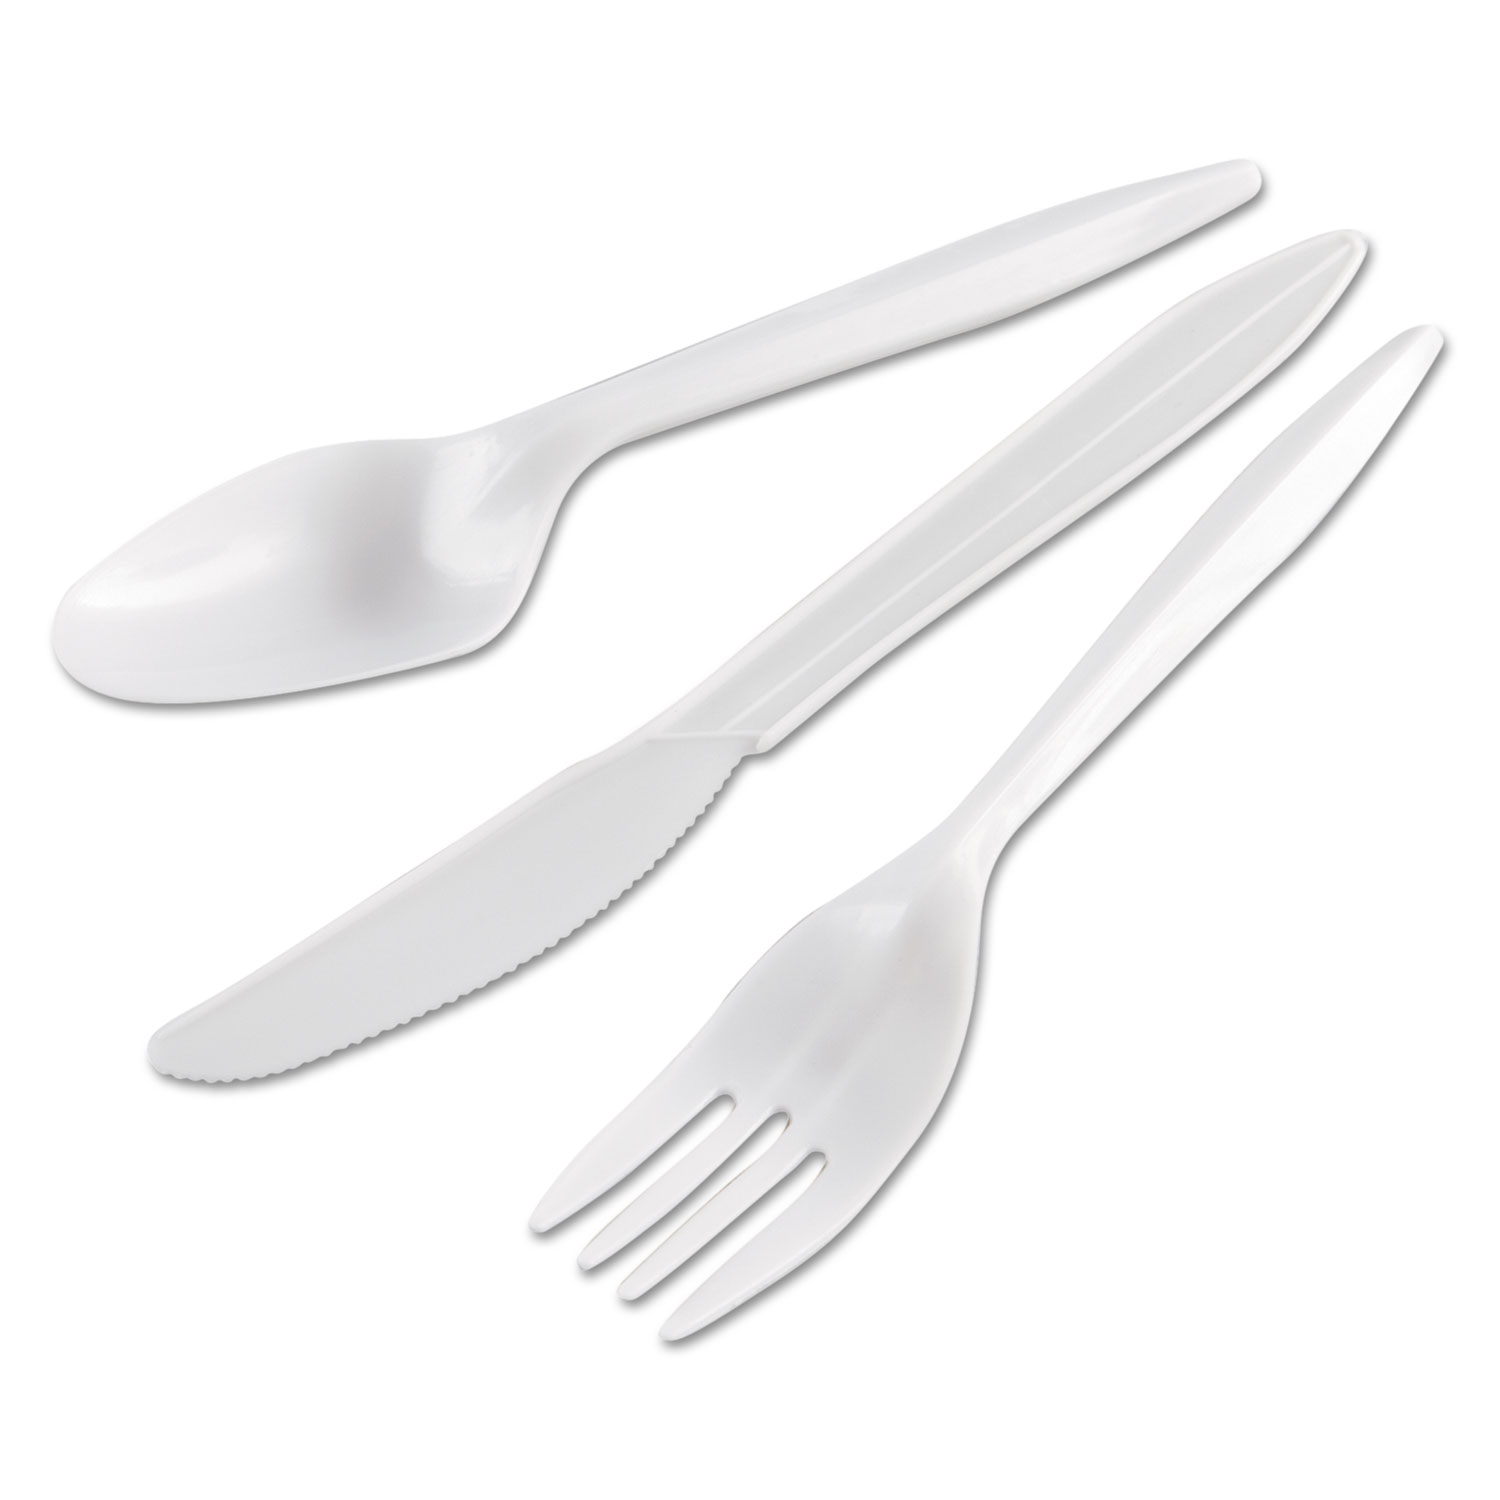  GEN GENCOMBOKIT WraPolypropyleneed Cutlery Kit, Fork/Knife/Spoon, Mediumweight Plastic, 250/Carton (GENCOMBOKIT) 